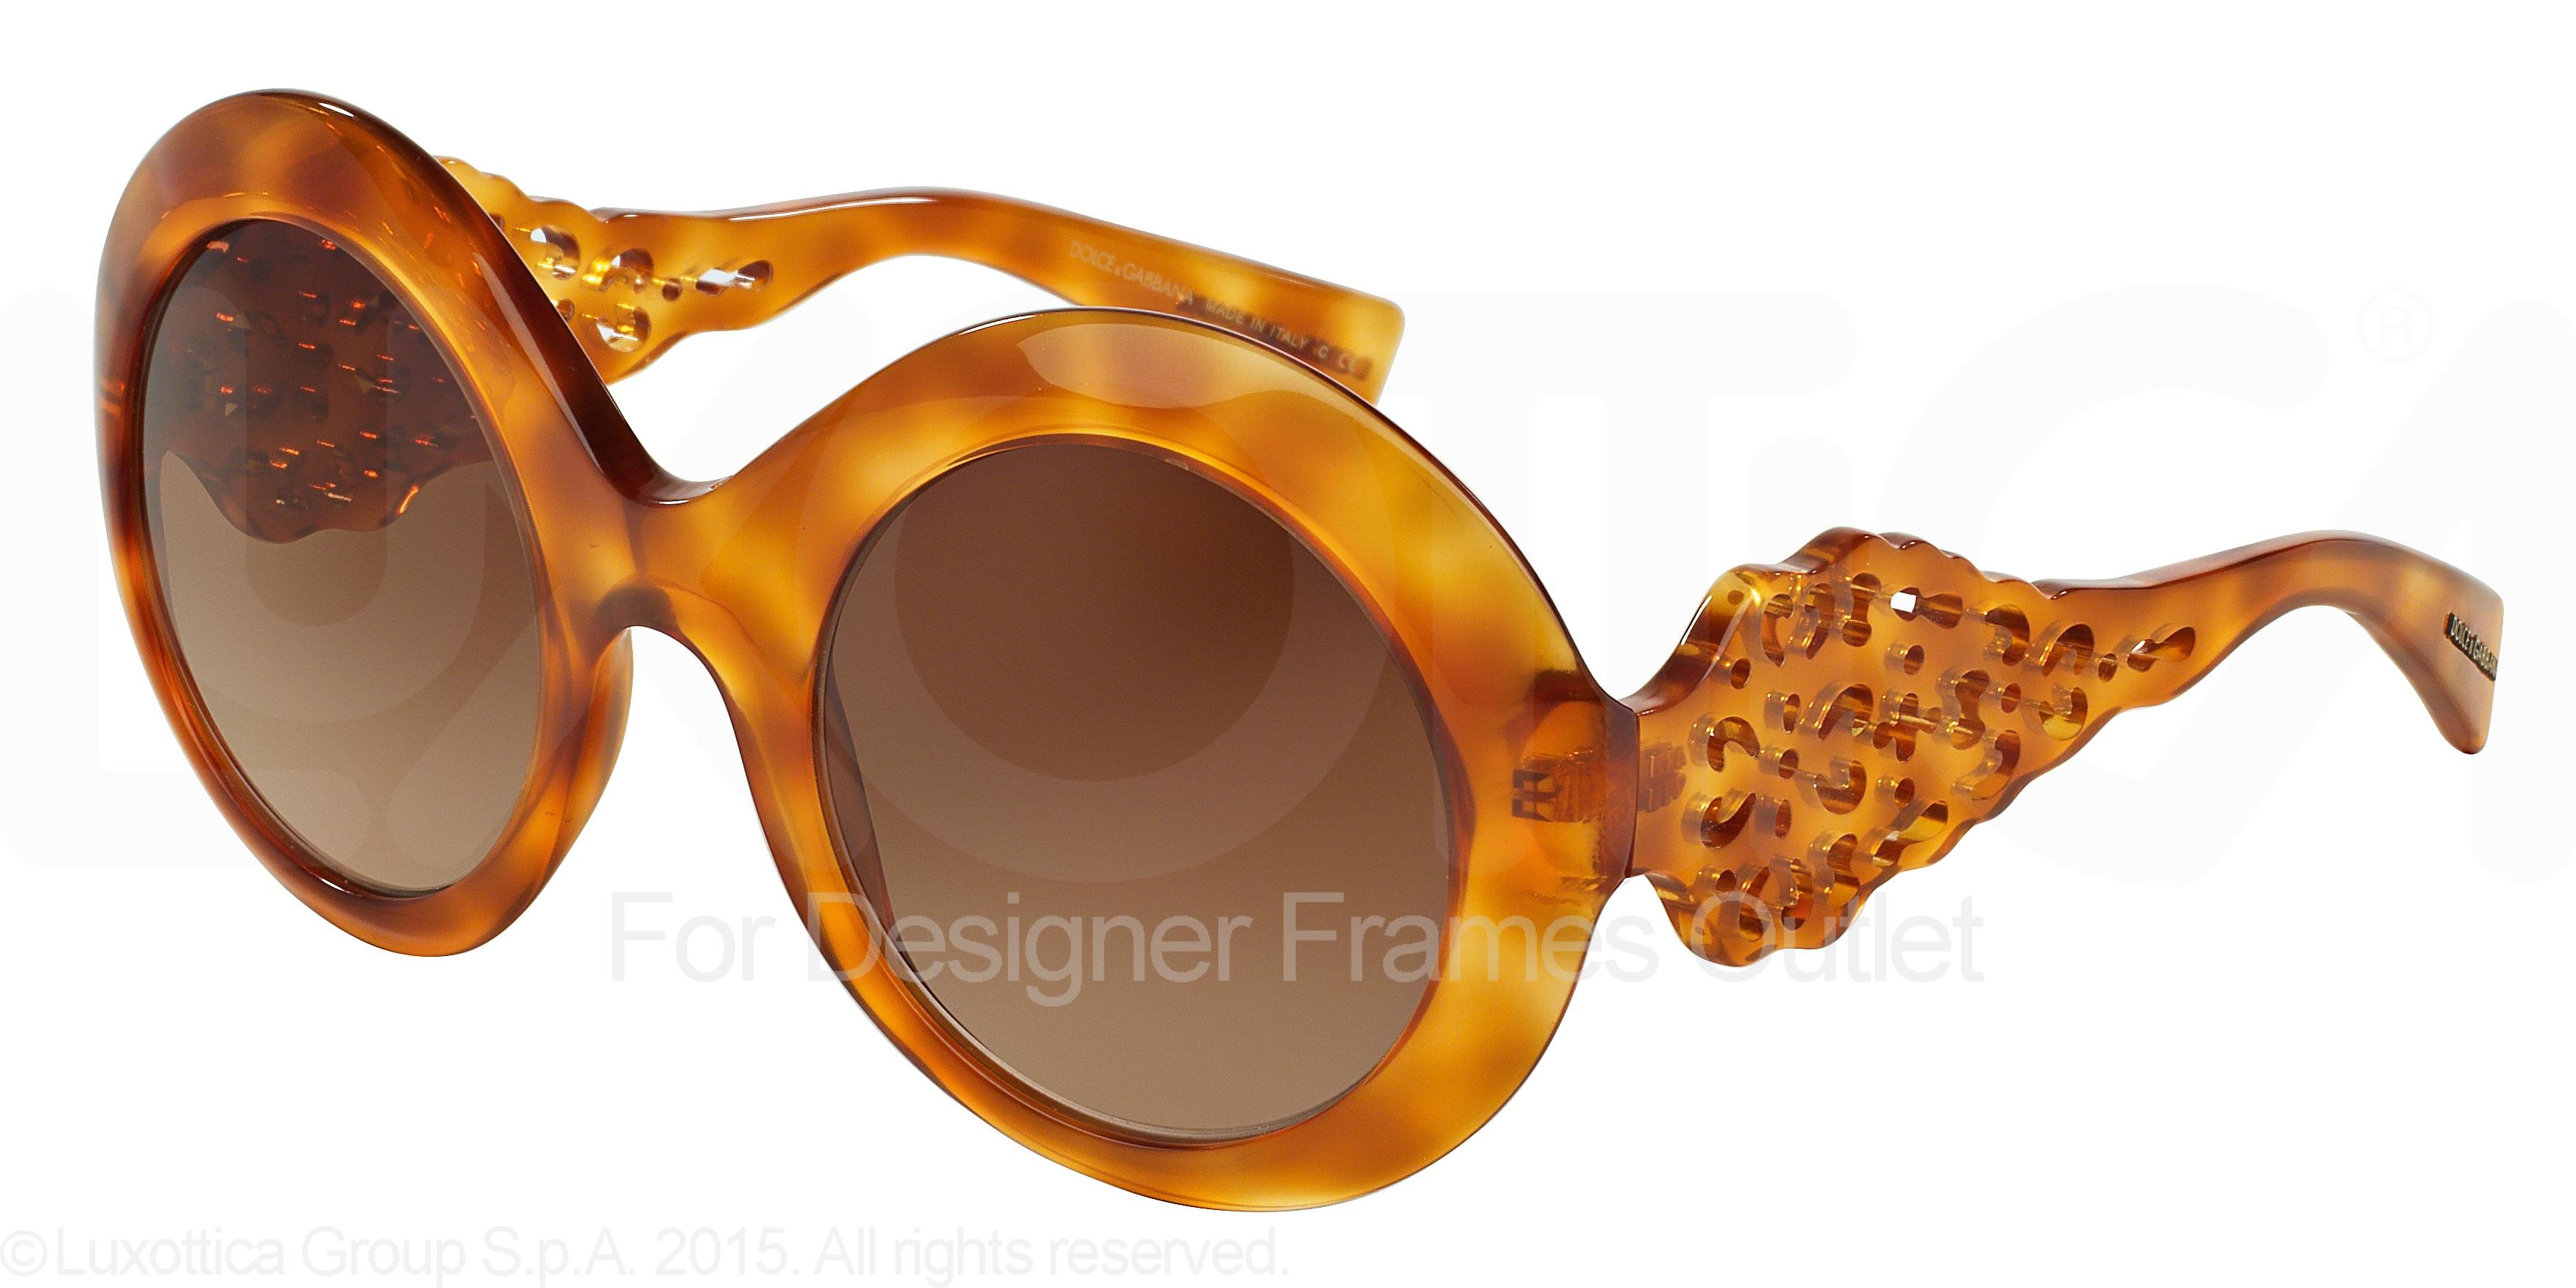 Picture of Dolce & Gabbana Sunglasses DG4265